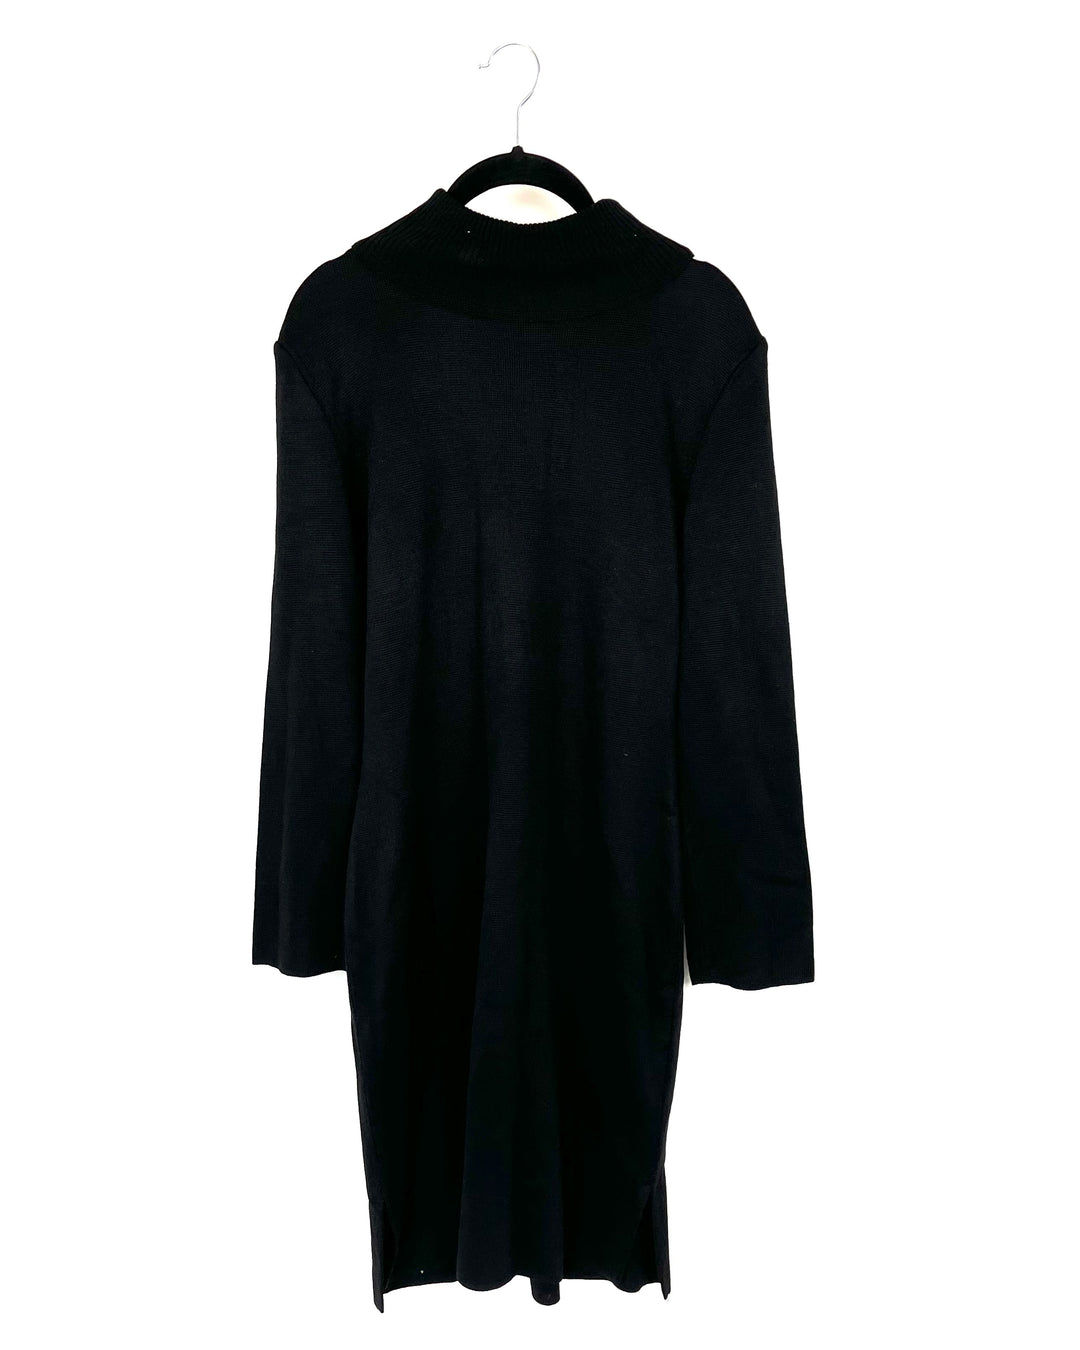 Black Turtleneck Midi Dress -  Size 6/8